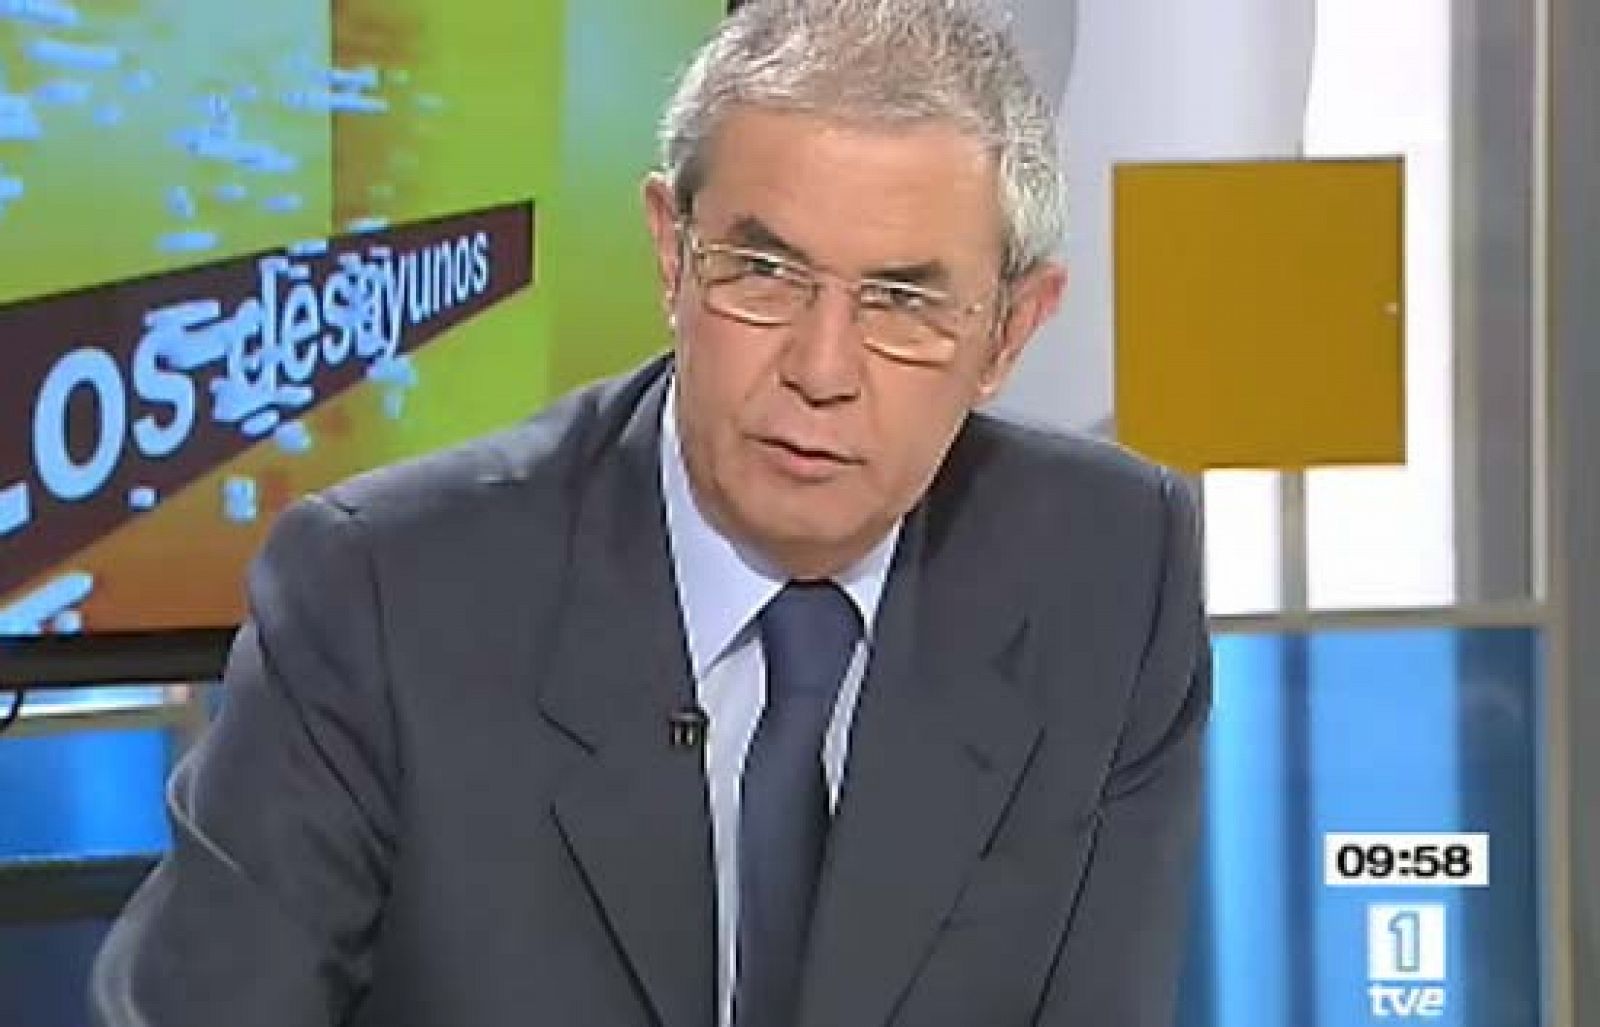 Emilio Pérez Touriño, presidente de Galicia, pide en 'Los Desayunos' de Televisión Española un modelo de financiacíon equilibrado.